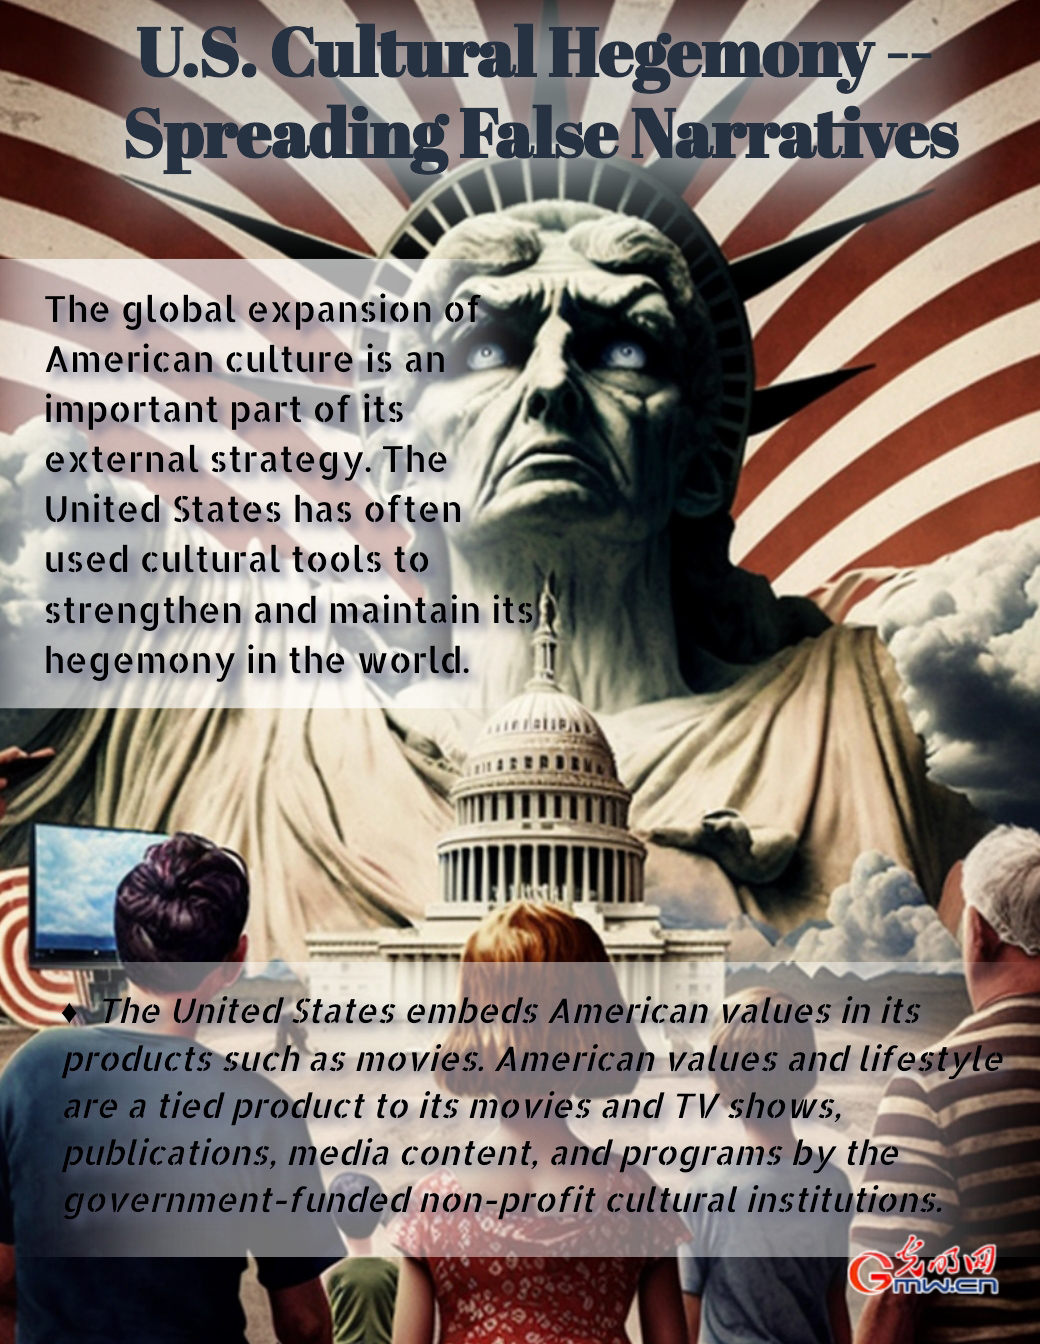 U.S. Cultural Hegemony -- Spreading False Narratives